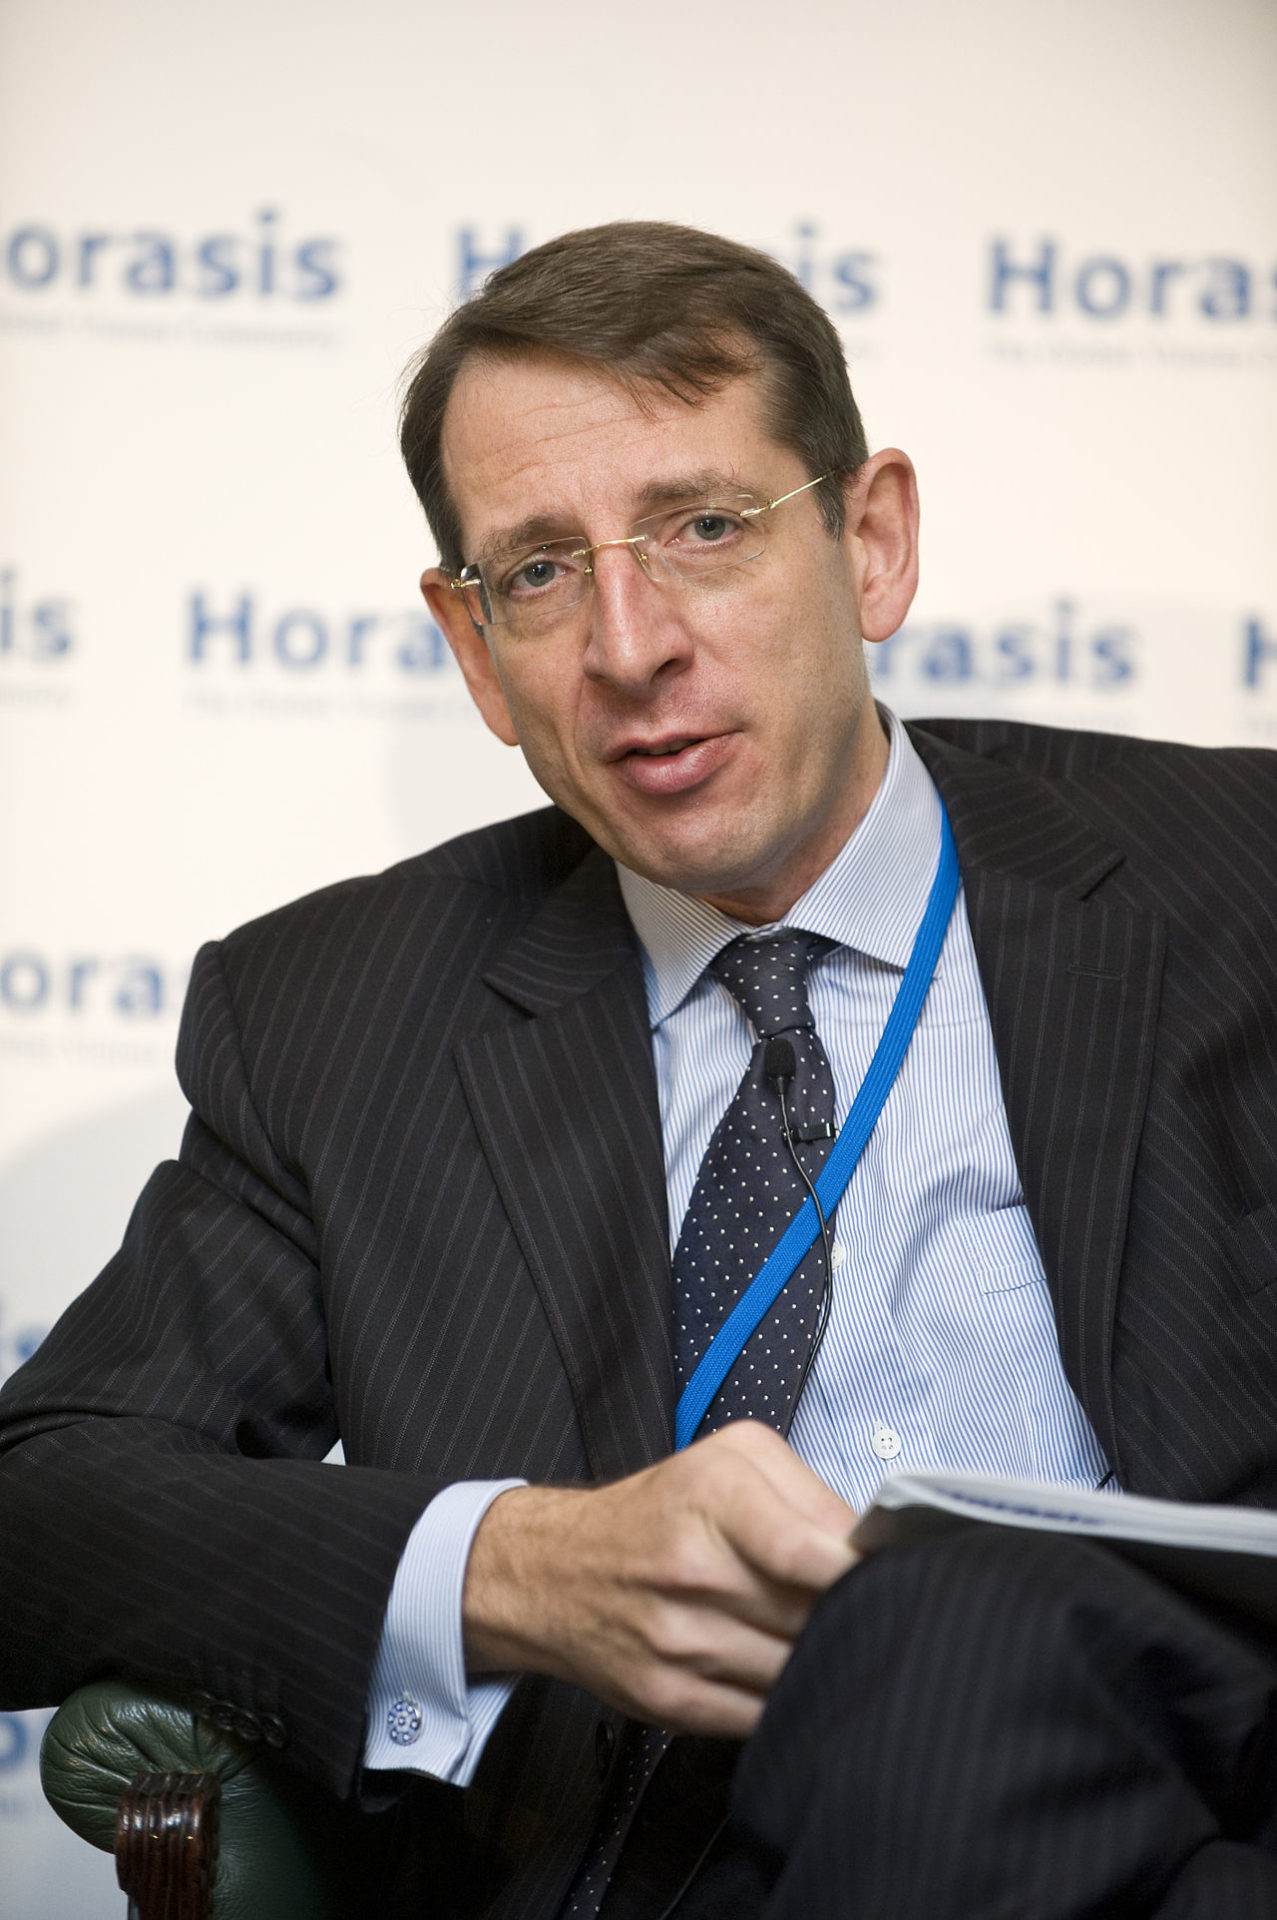 Frank-Jürgen Richter, chairman of Horasis (Photo courtesy of Wikipedia)